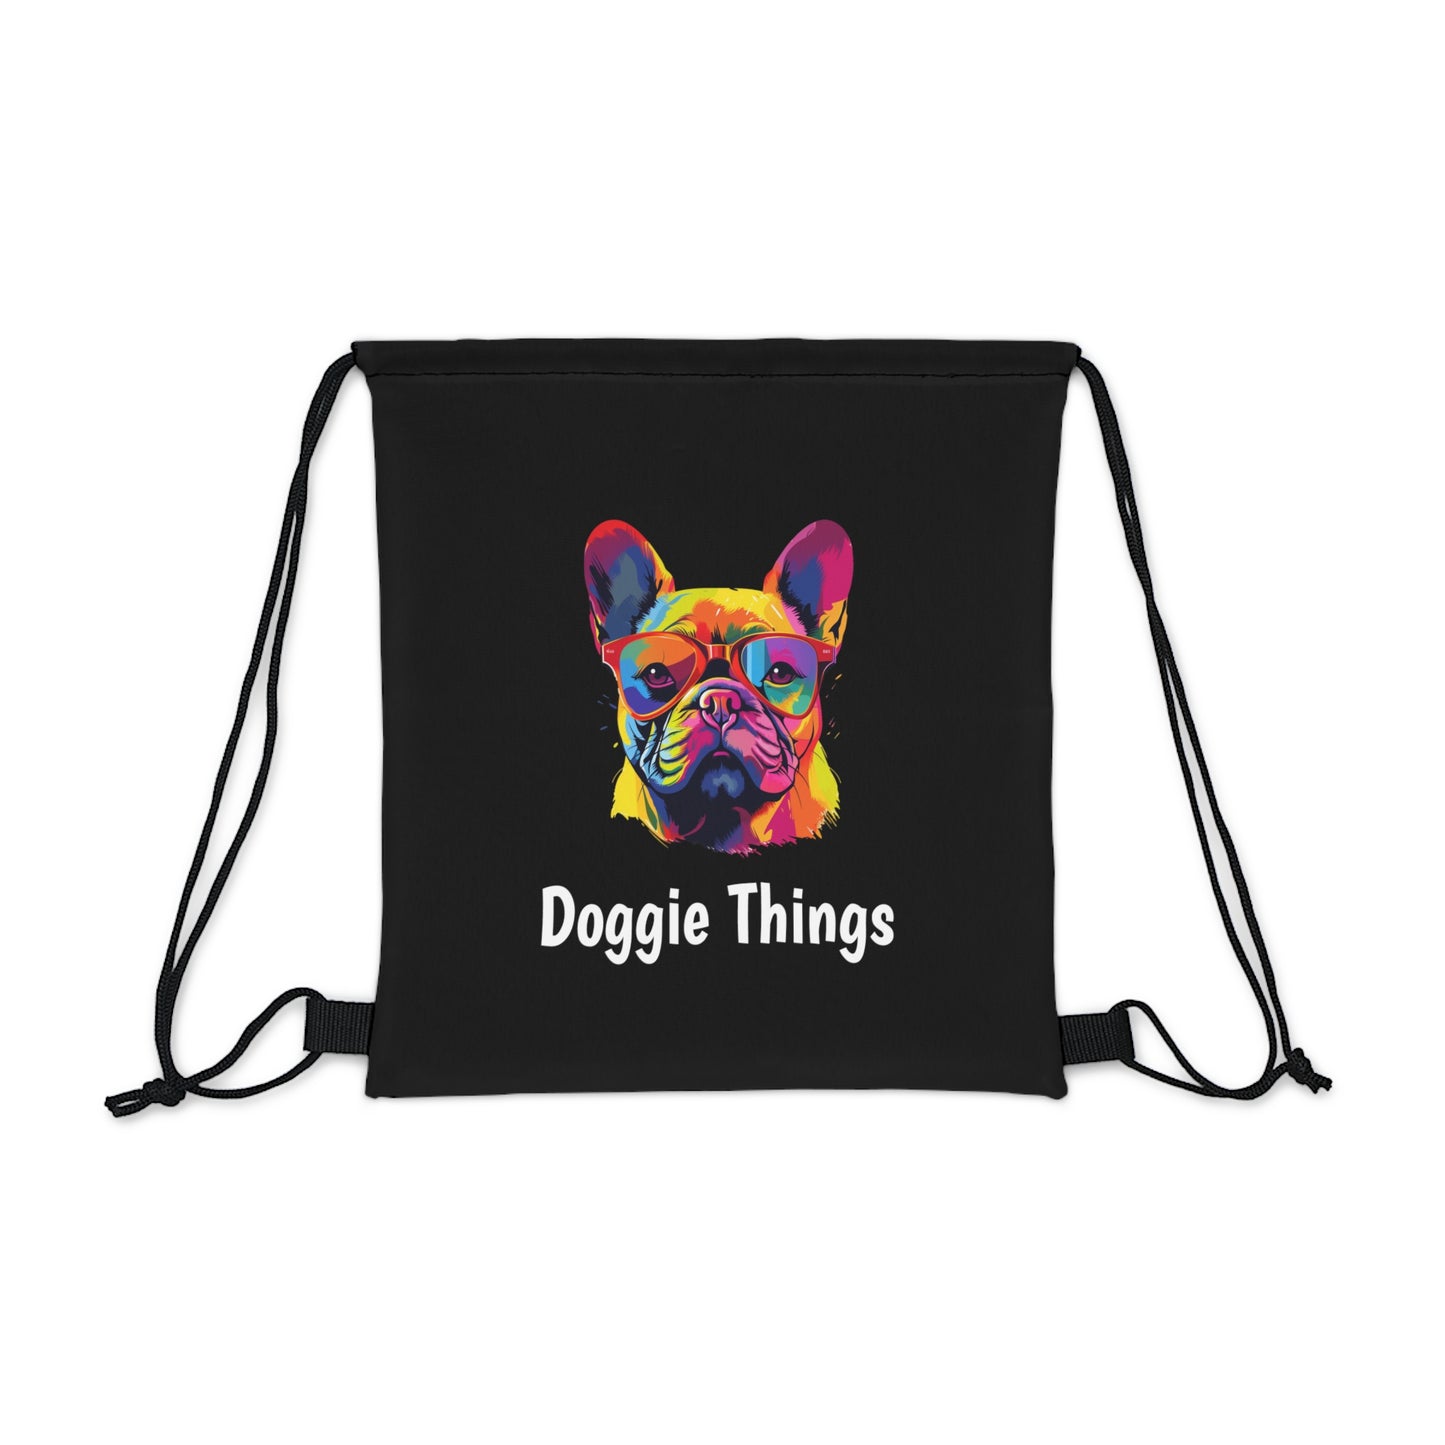 French Bulldog Doggie Things Outdoor Black Drawstring Bag